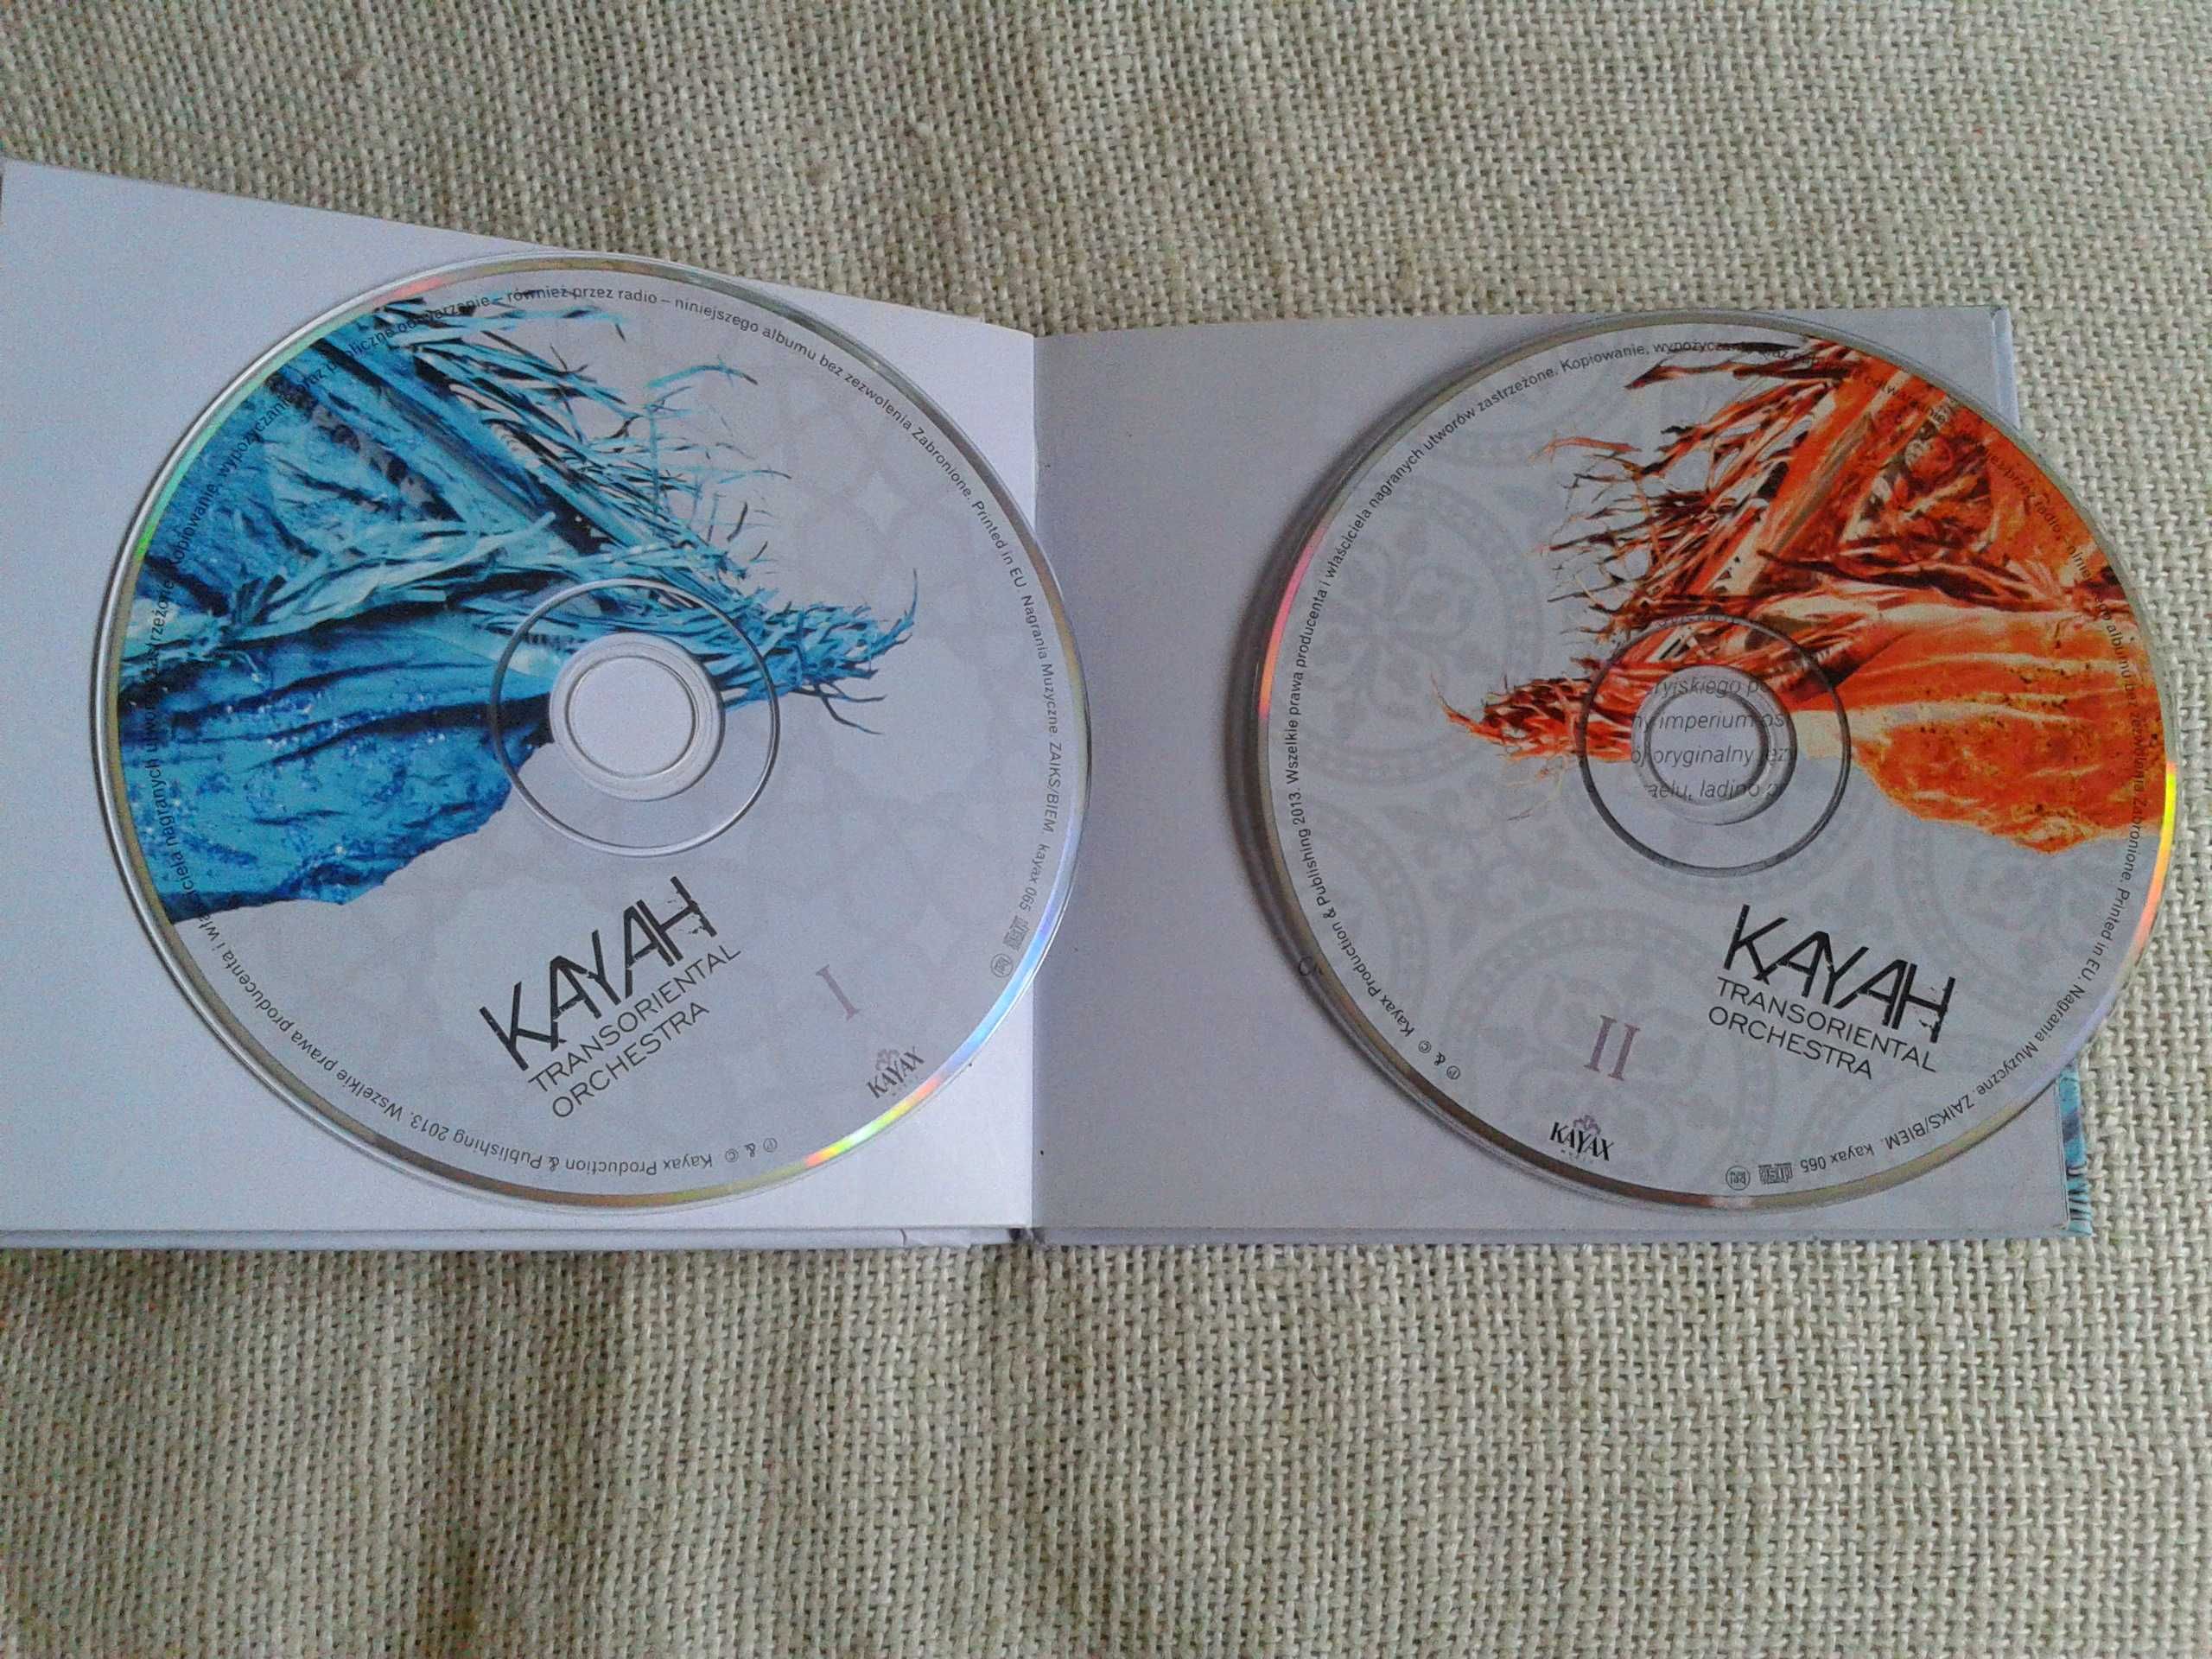 Kayah - Transoriental Orchestra  2CD